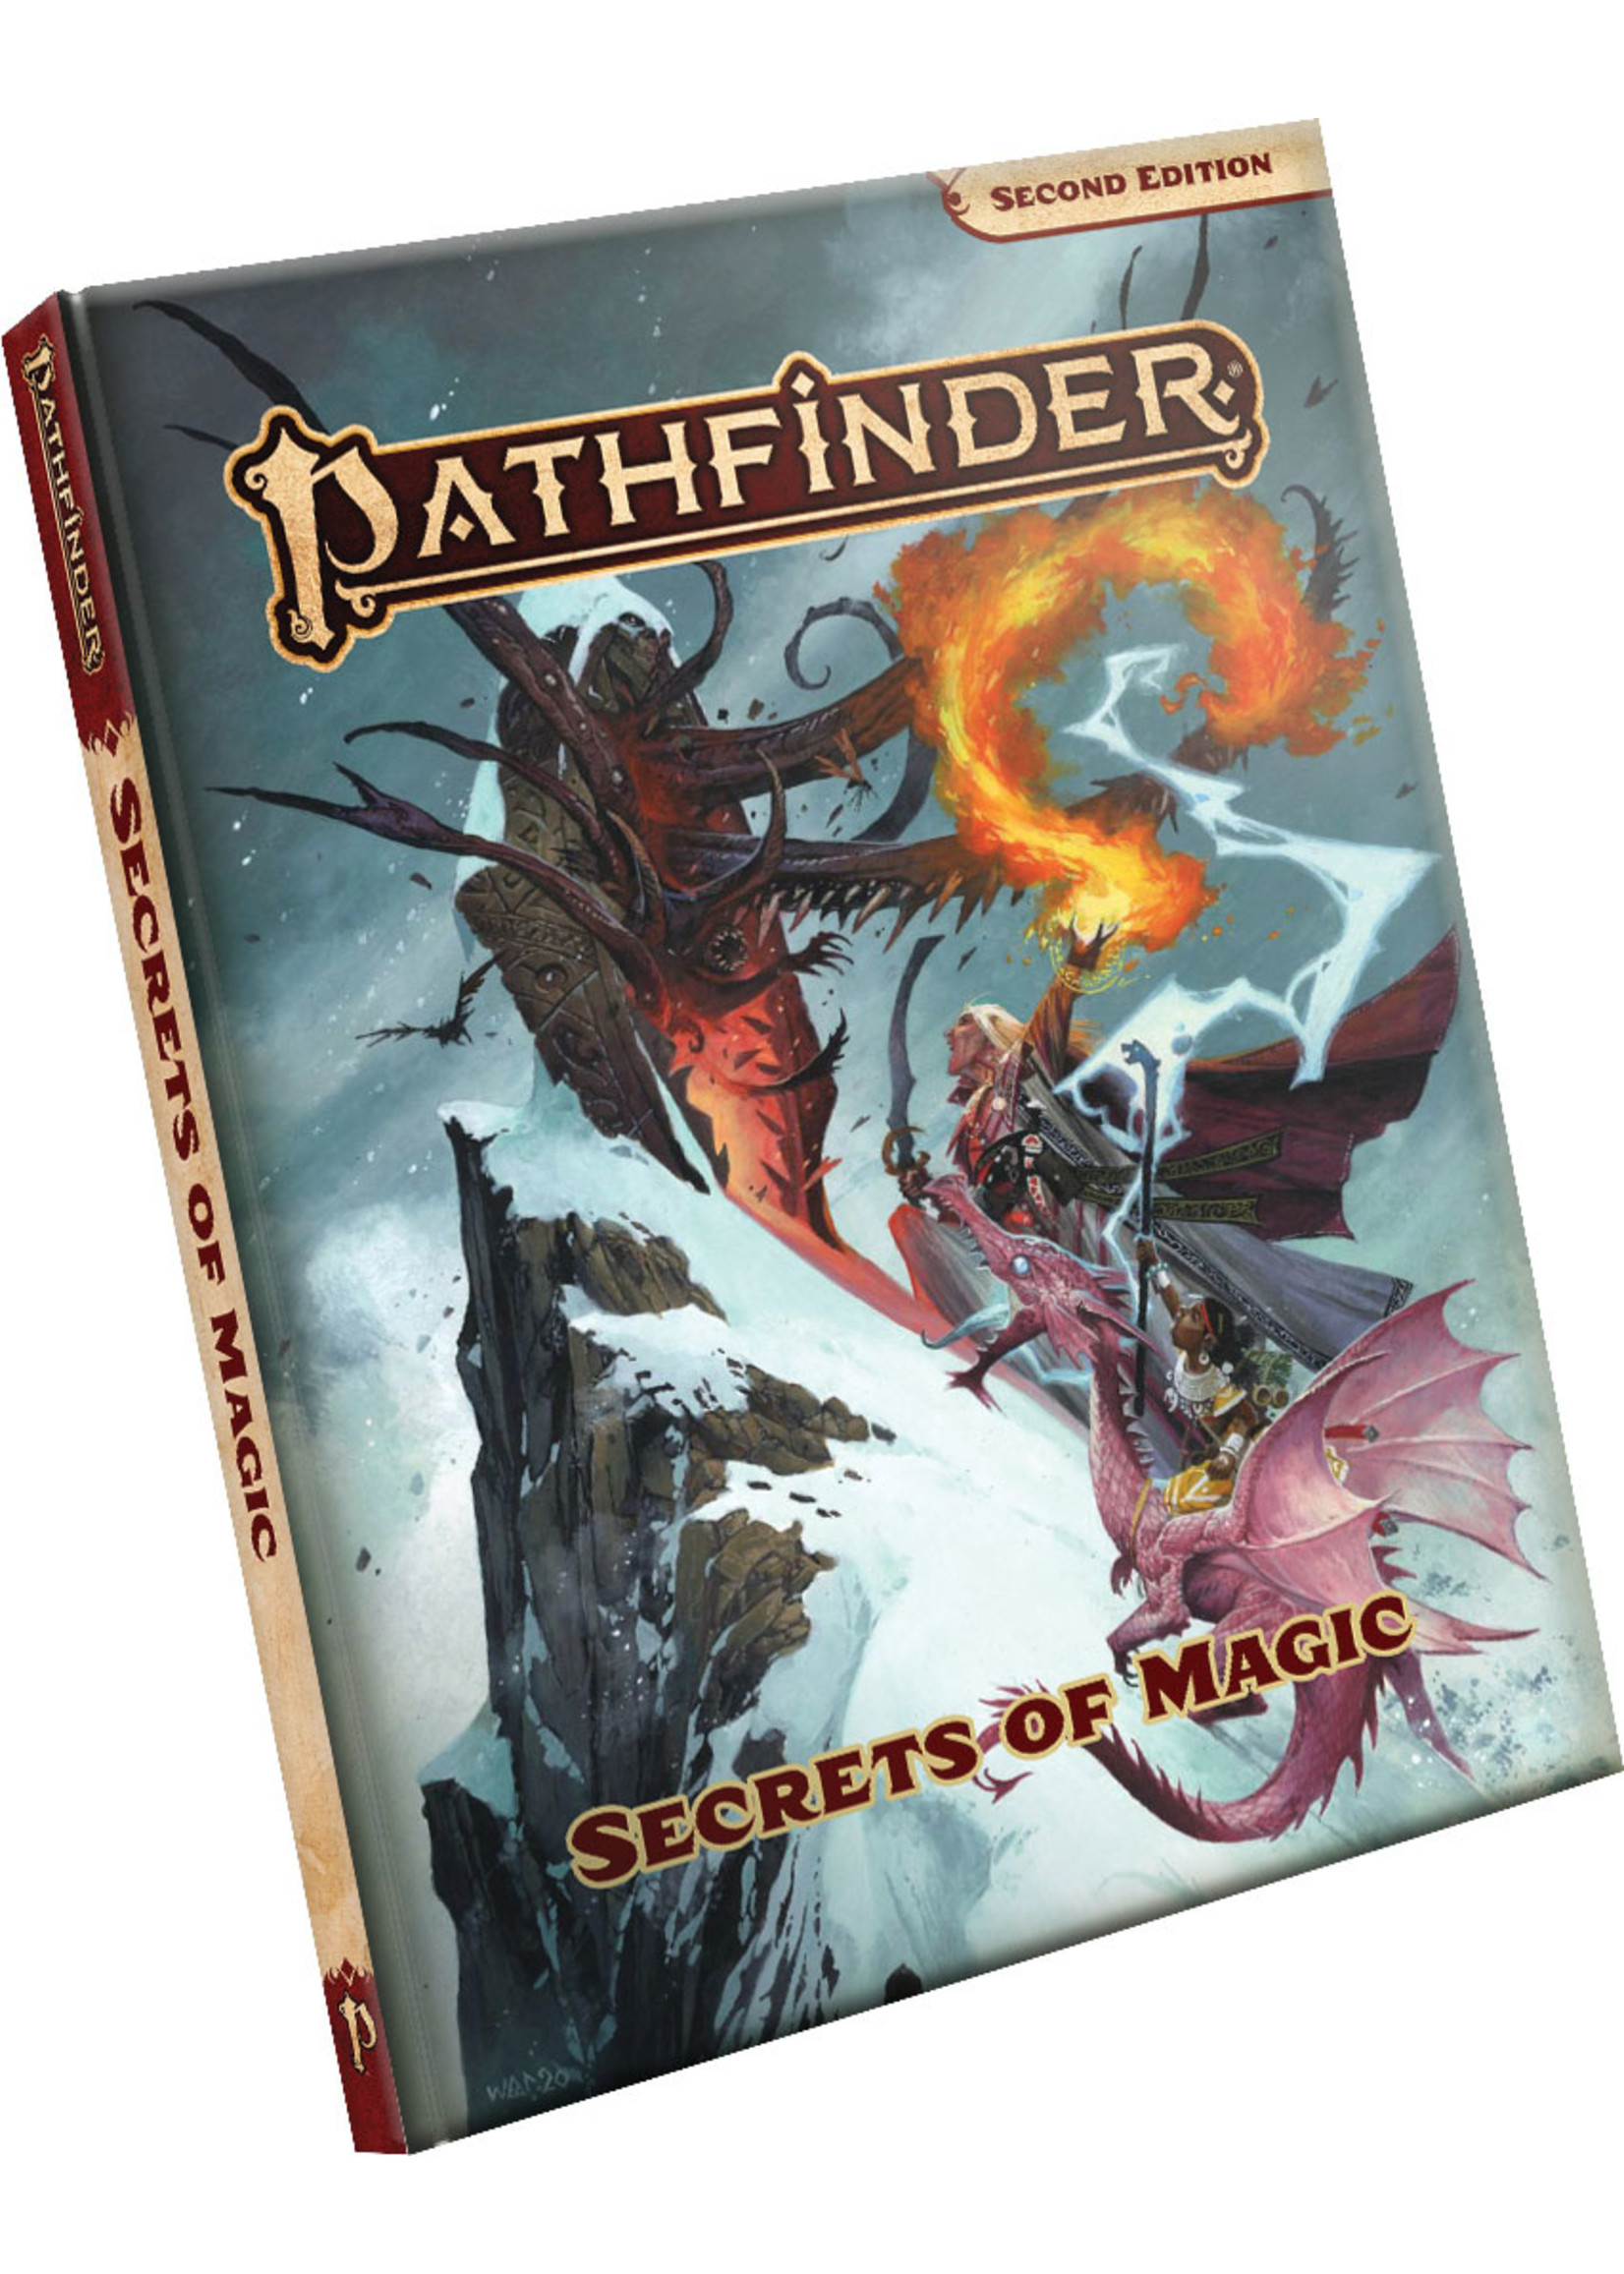 Pathfinder Secrets of Magic Hardcover